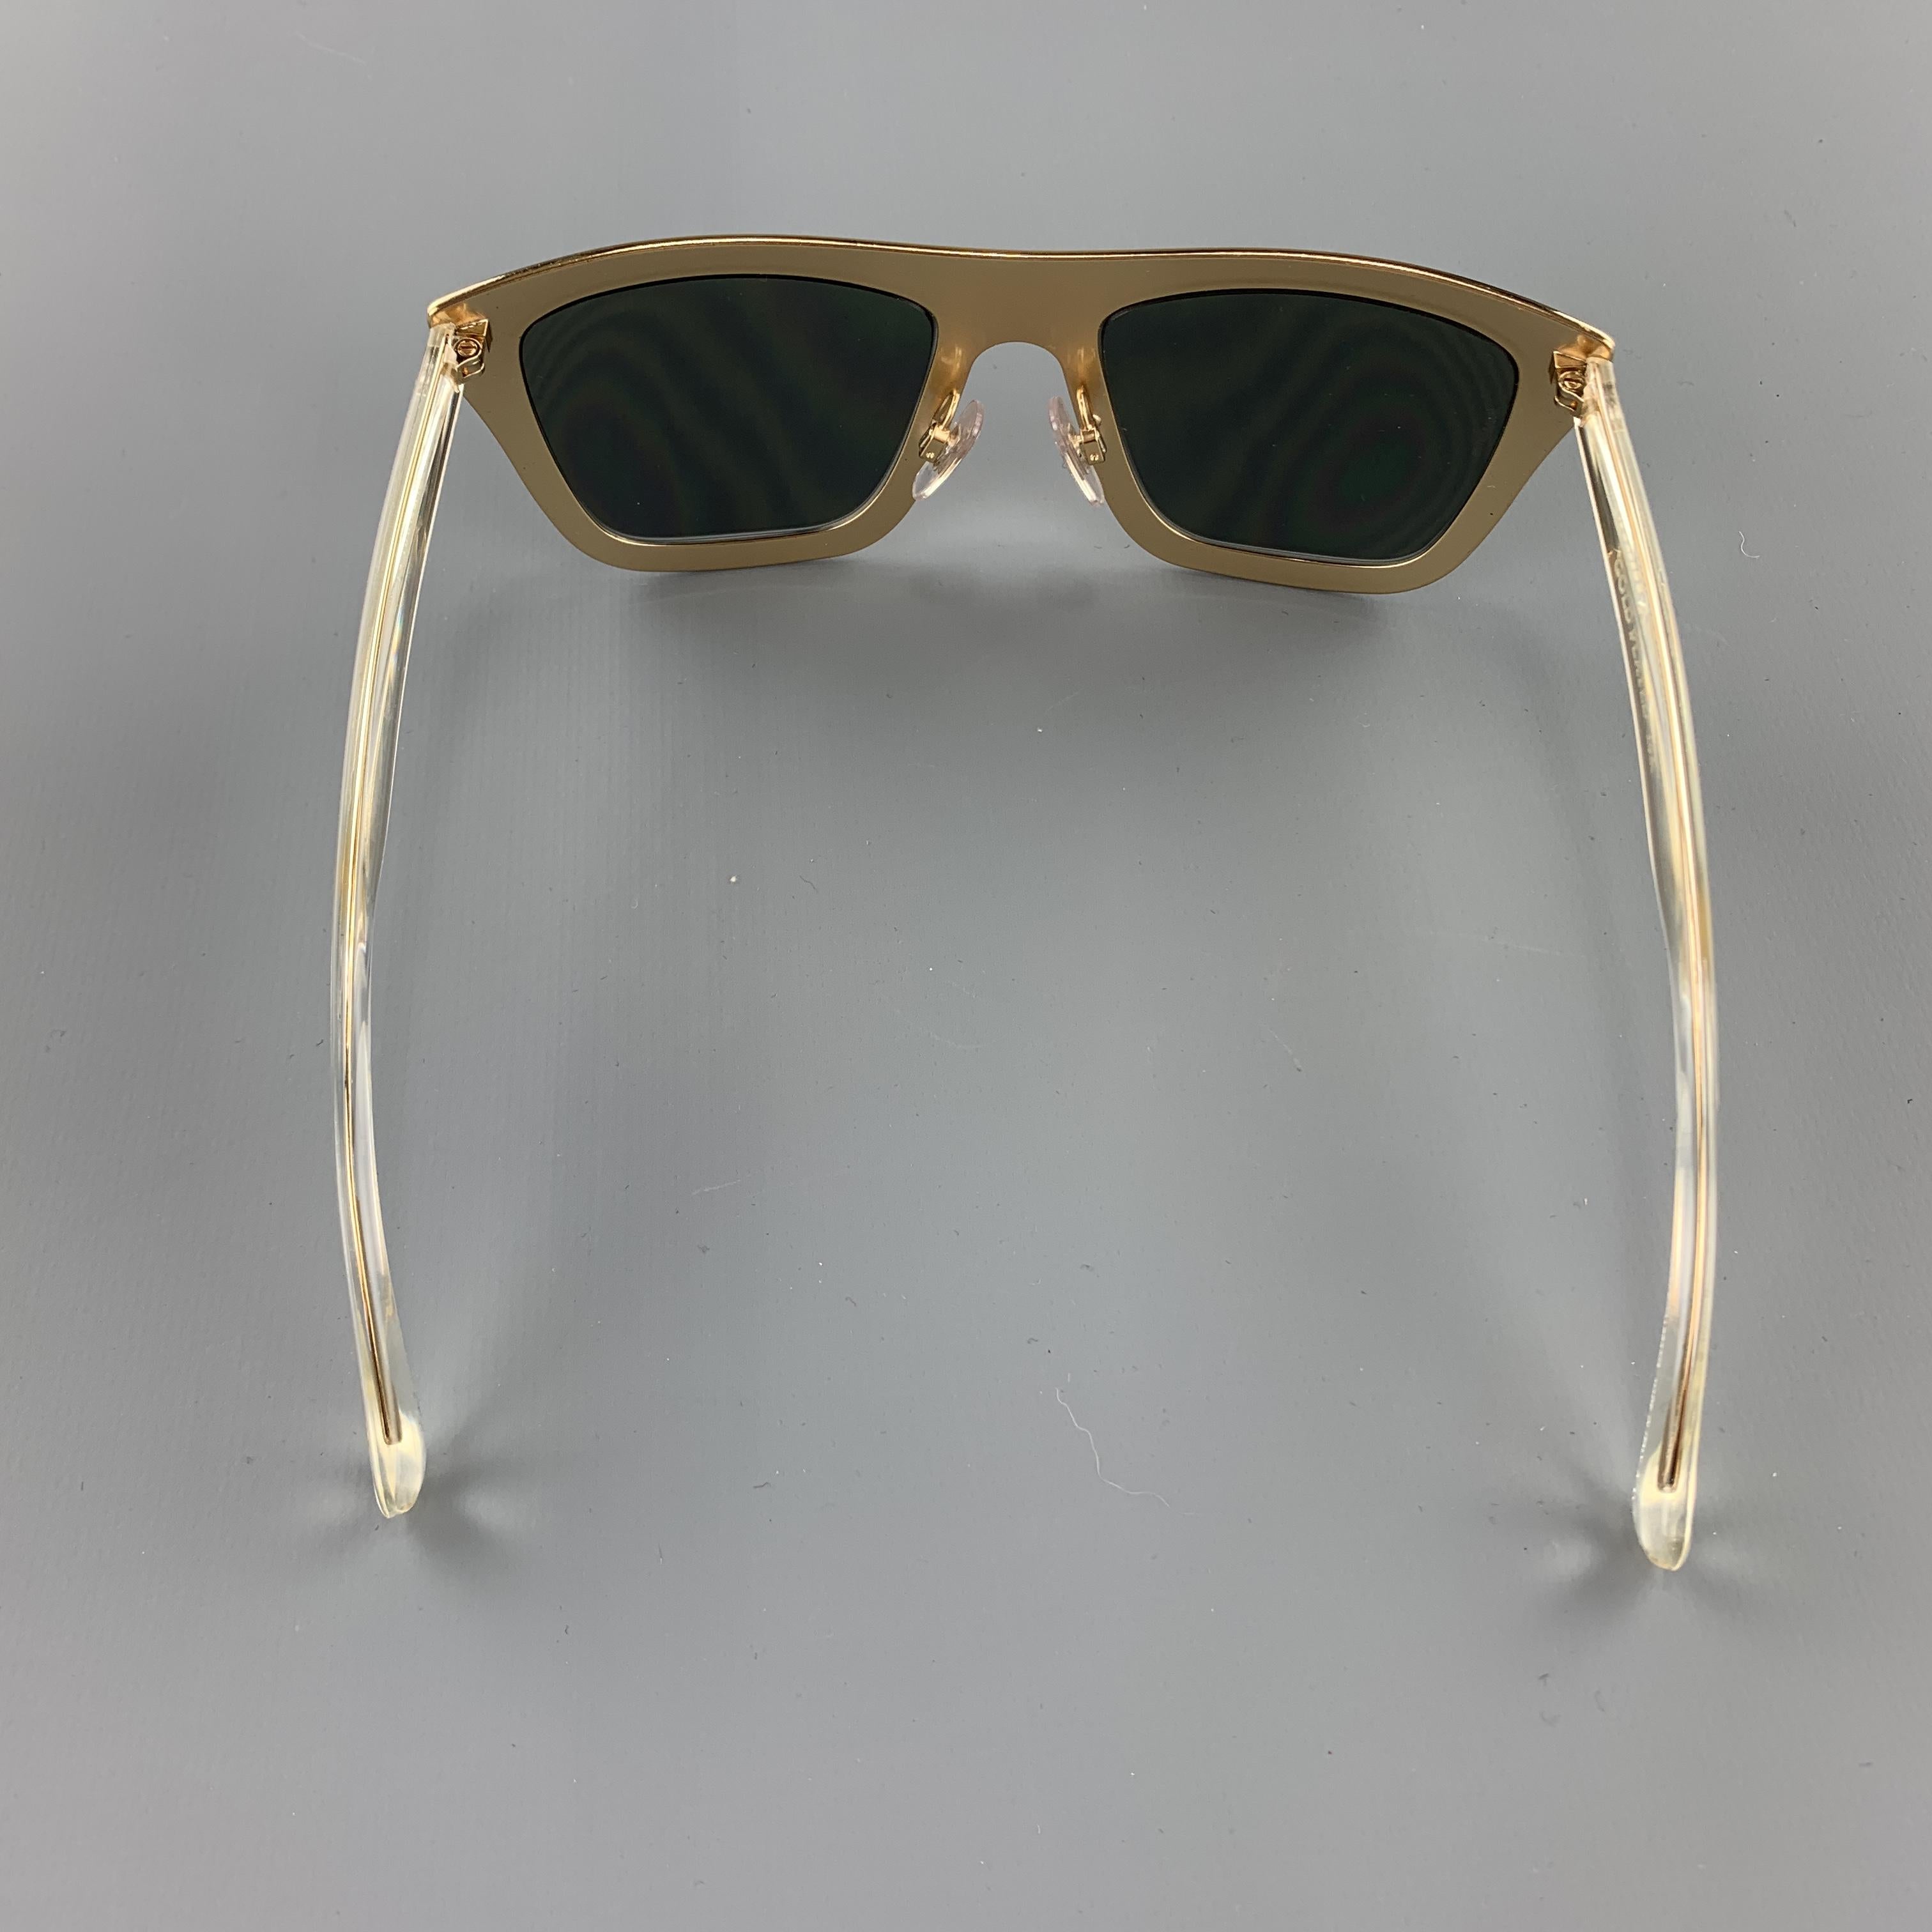 dolce and gabbana gold sunglasses